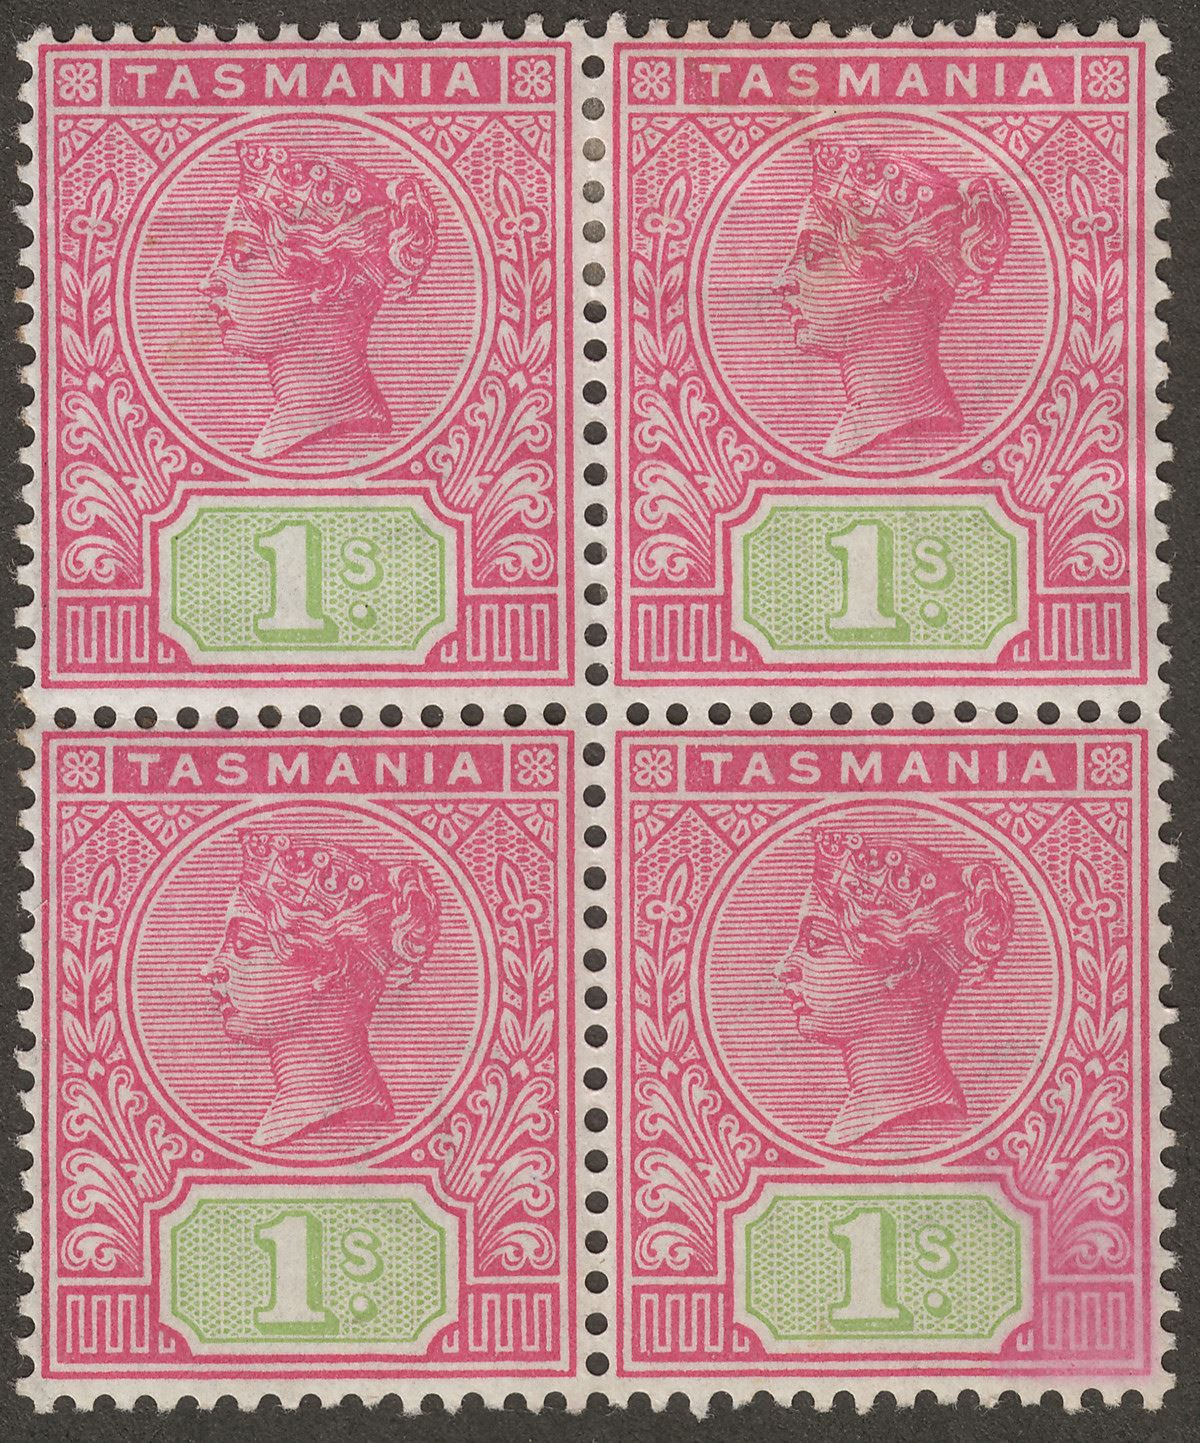 Tasmania 1892 Queen Victoria 1sh Rose and Green Block of 4 Mint SG221 cat £48